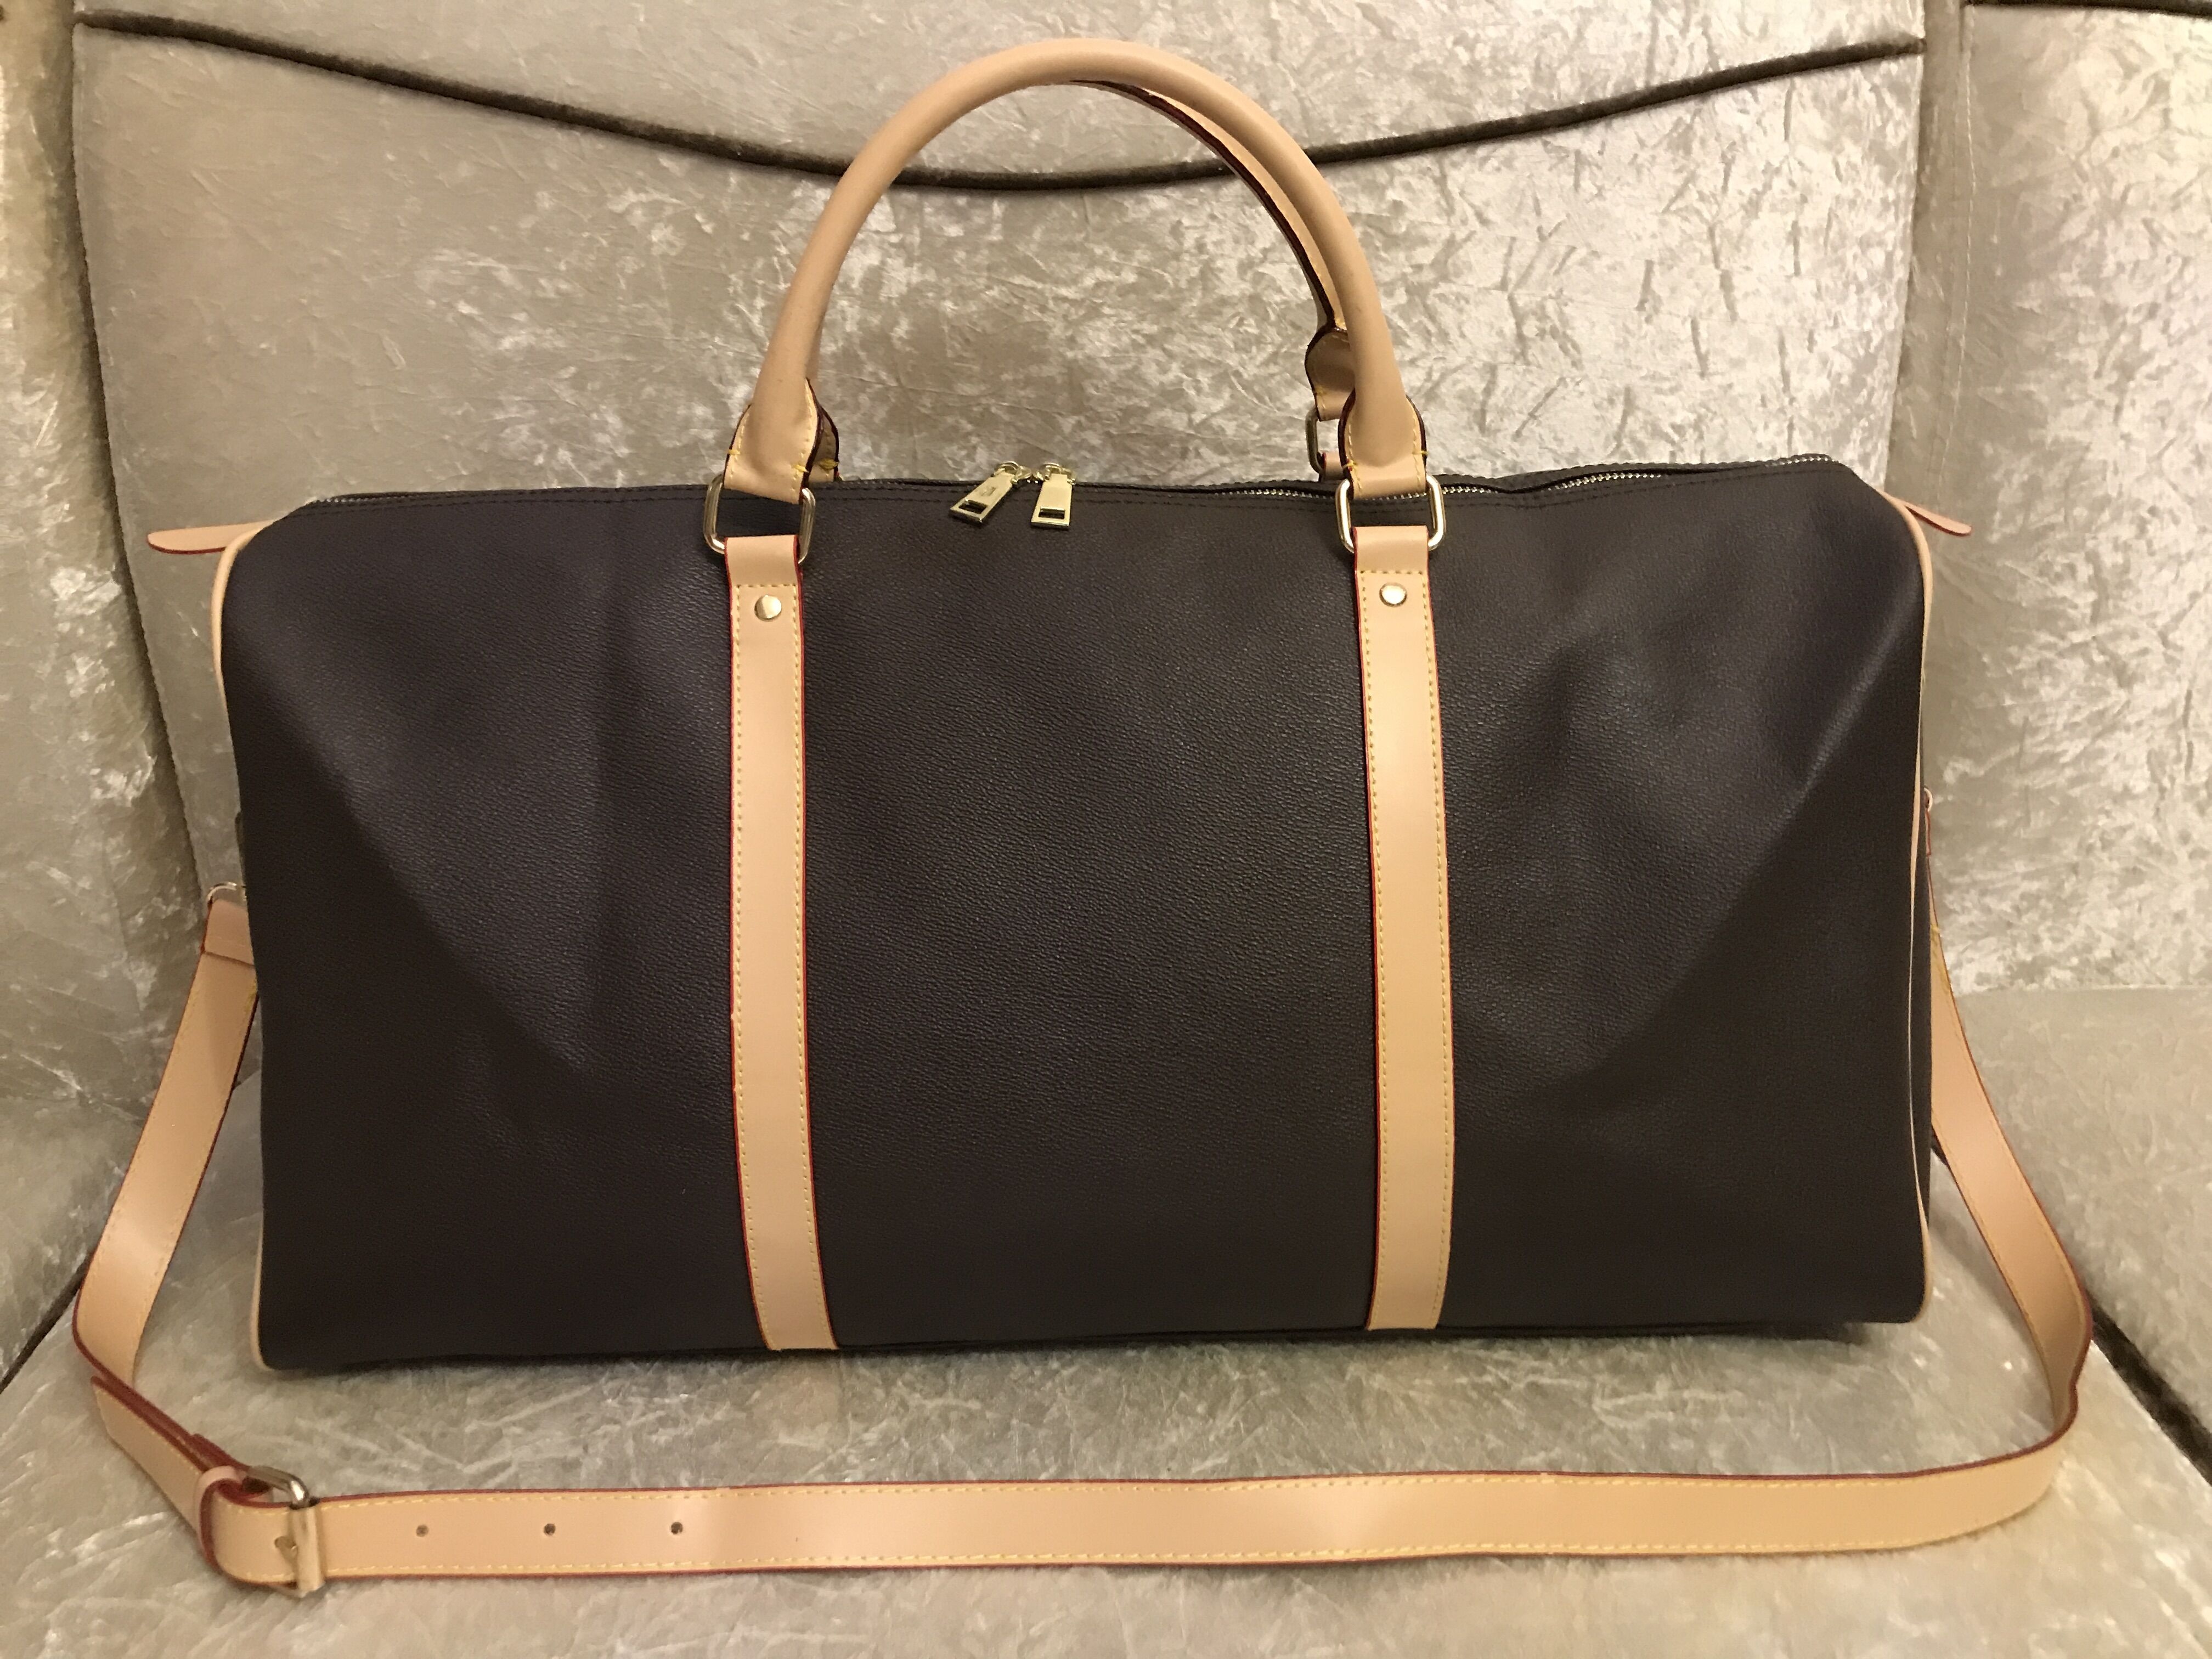 2020 new fashion men women travel bag duffle bag, brand designer luggage handbags large capacity sport bag 54CM от DHgate WW